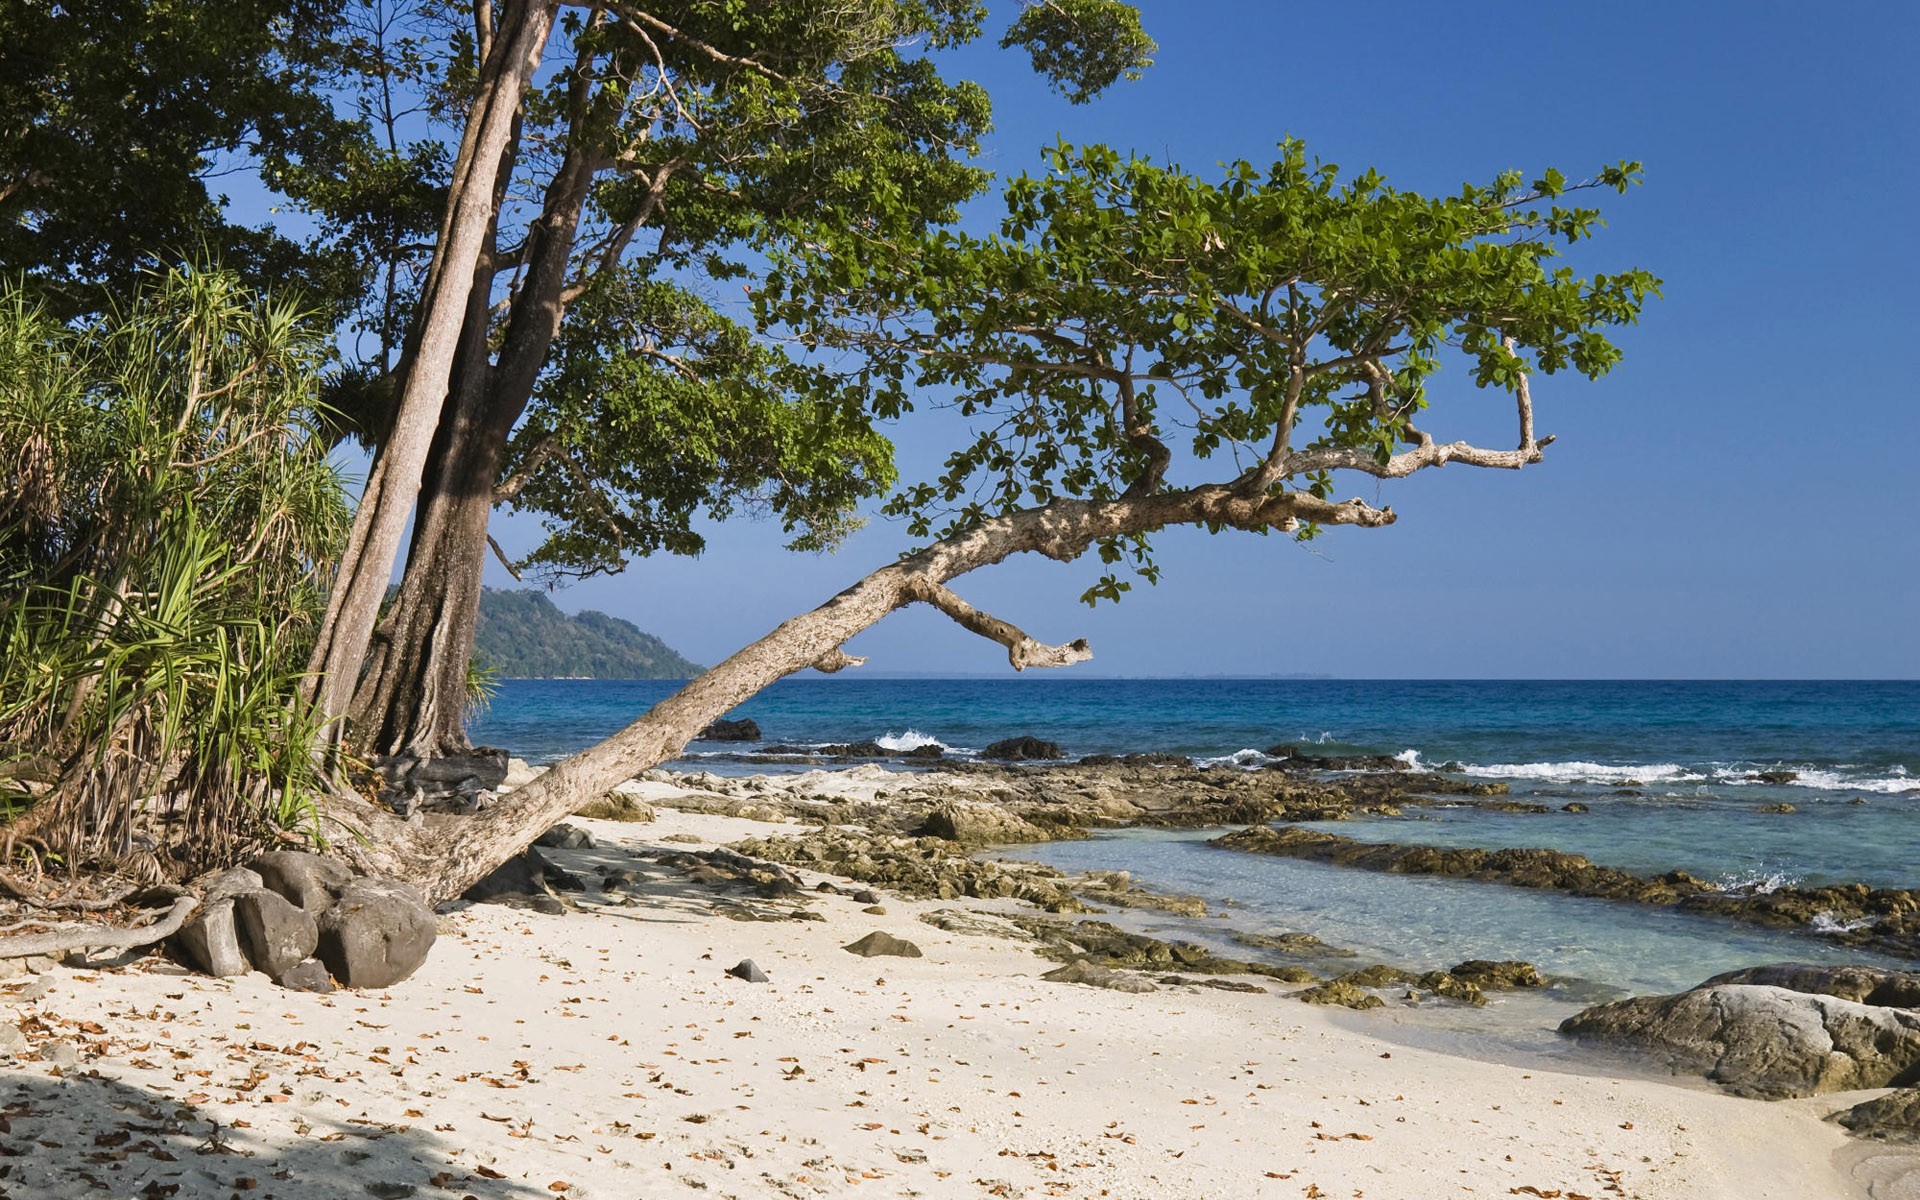 Beach tree. Хэвлок остров. Дерево на острове. Деревья на пляже. Деревья на побережье.